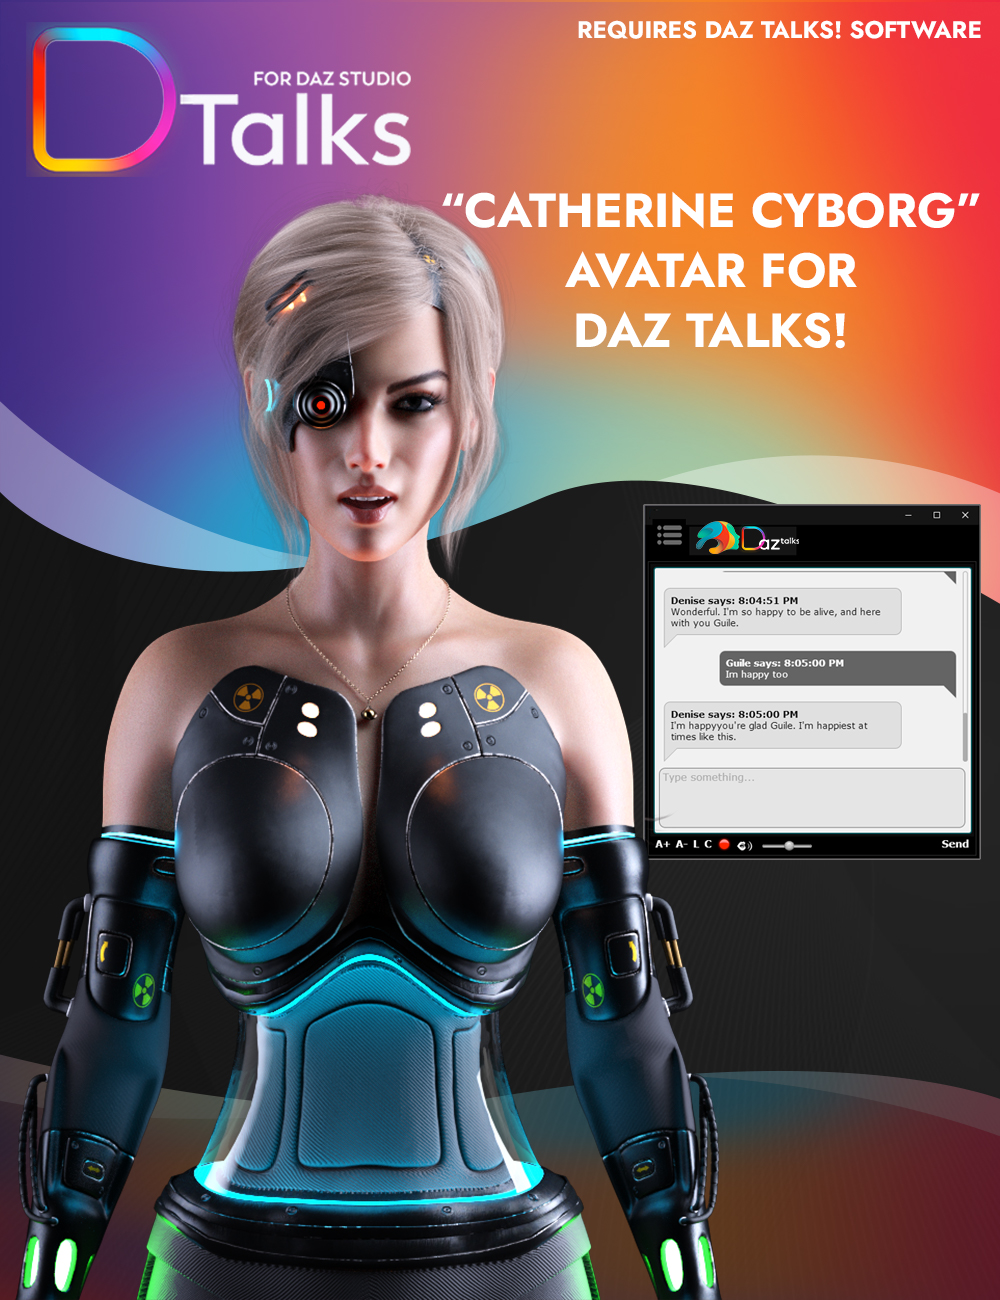 D-Talks! Avatar "Catherine Cyborg"